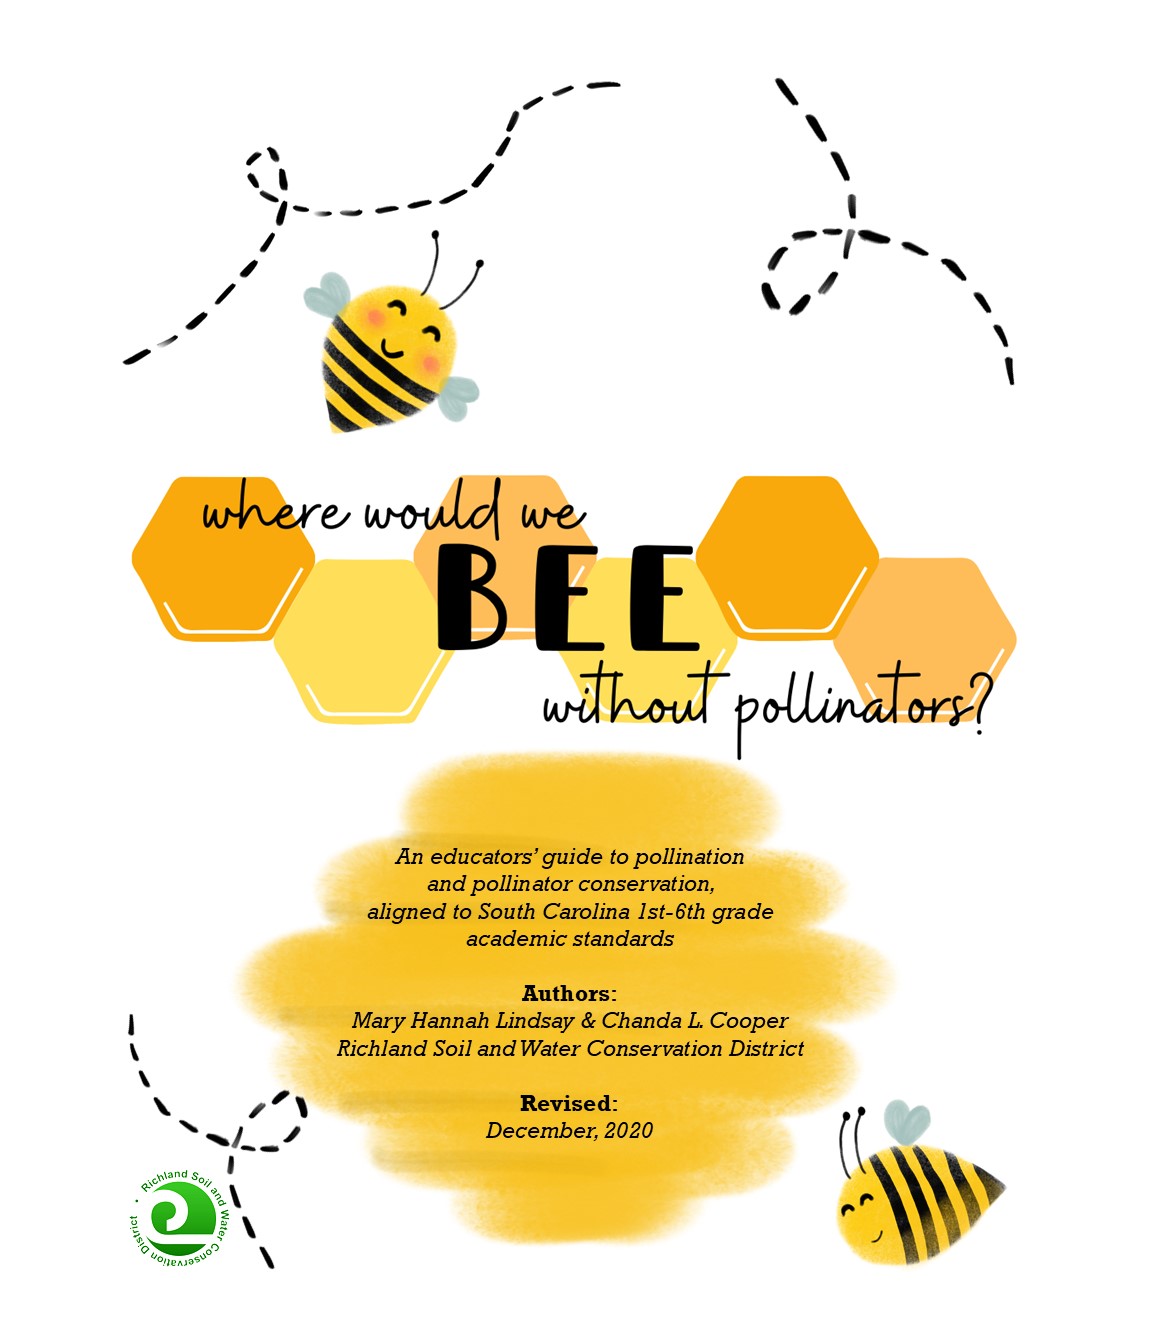 Cover image of pollinator educators' guide